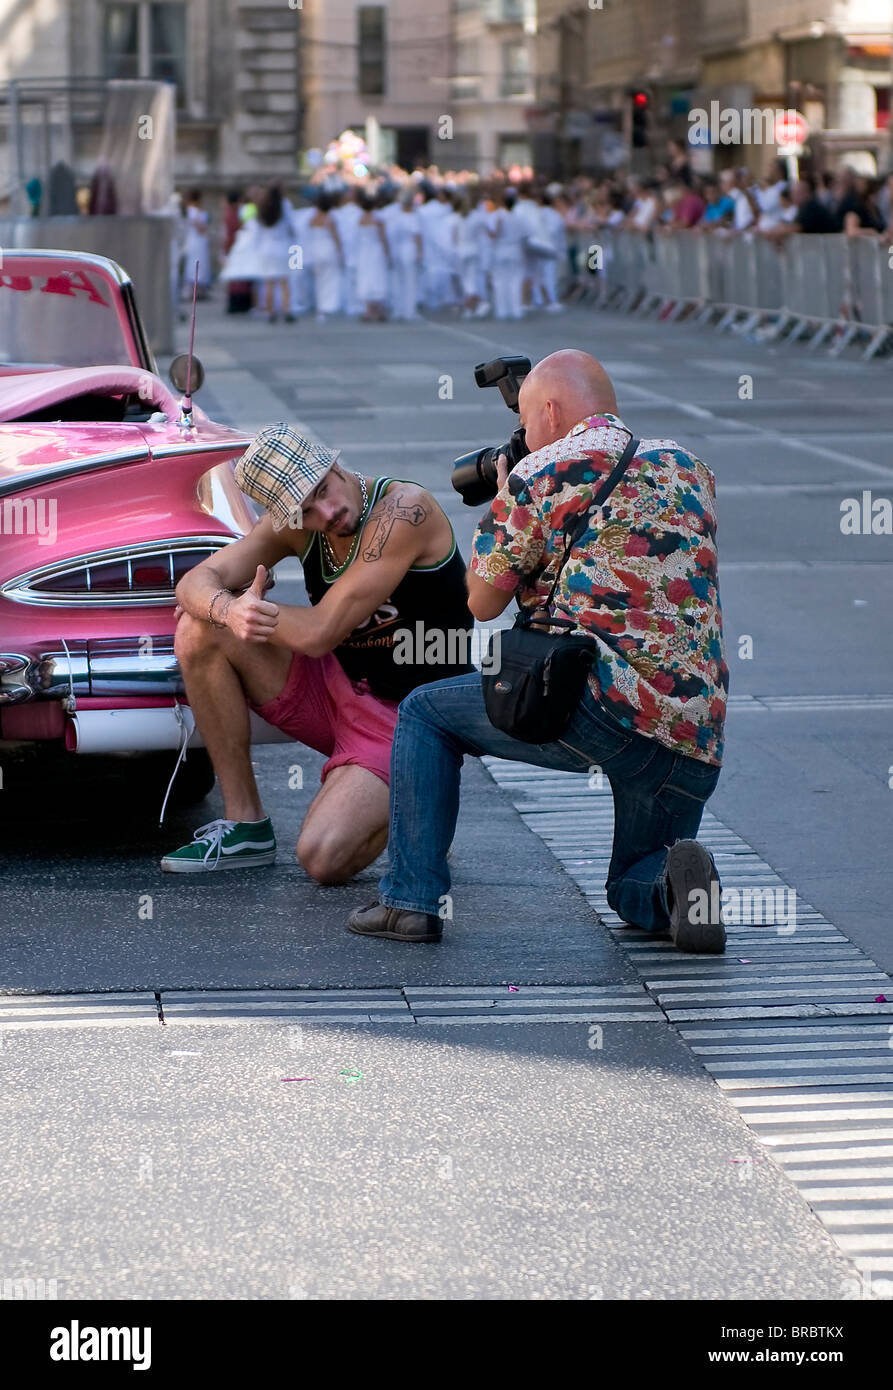 Photographer working on the street Stock Photo